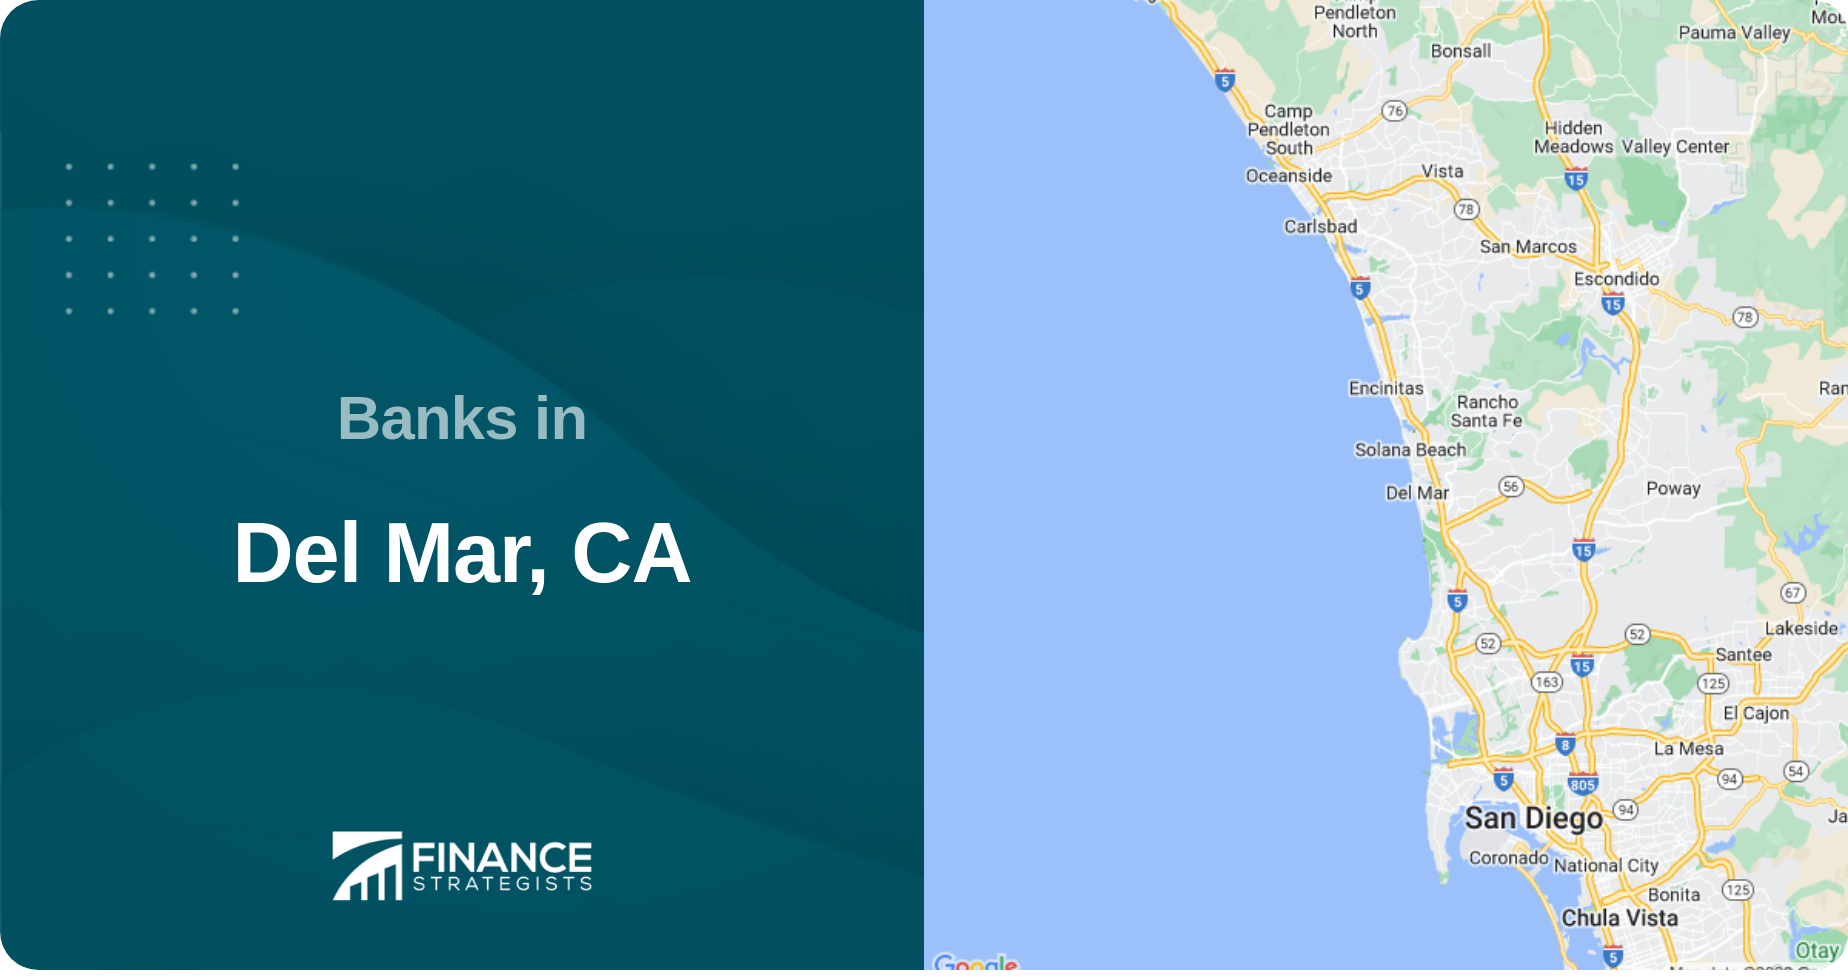 Banks in Del Mar, CA